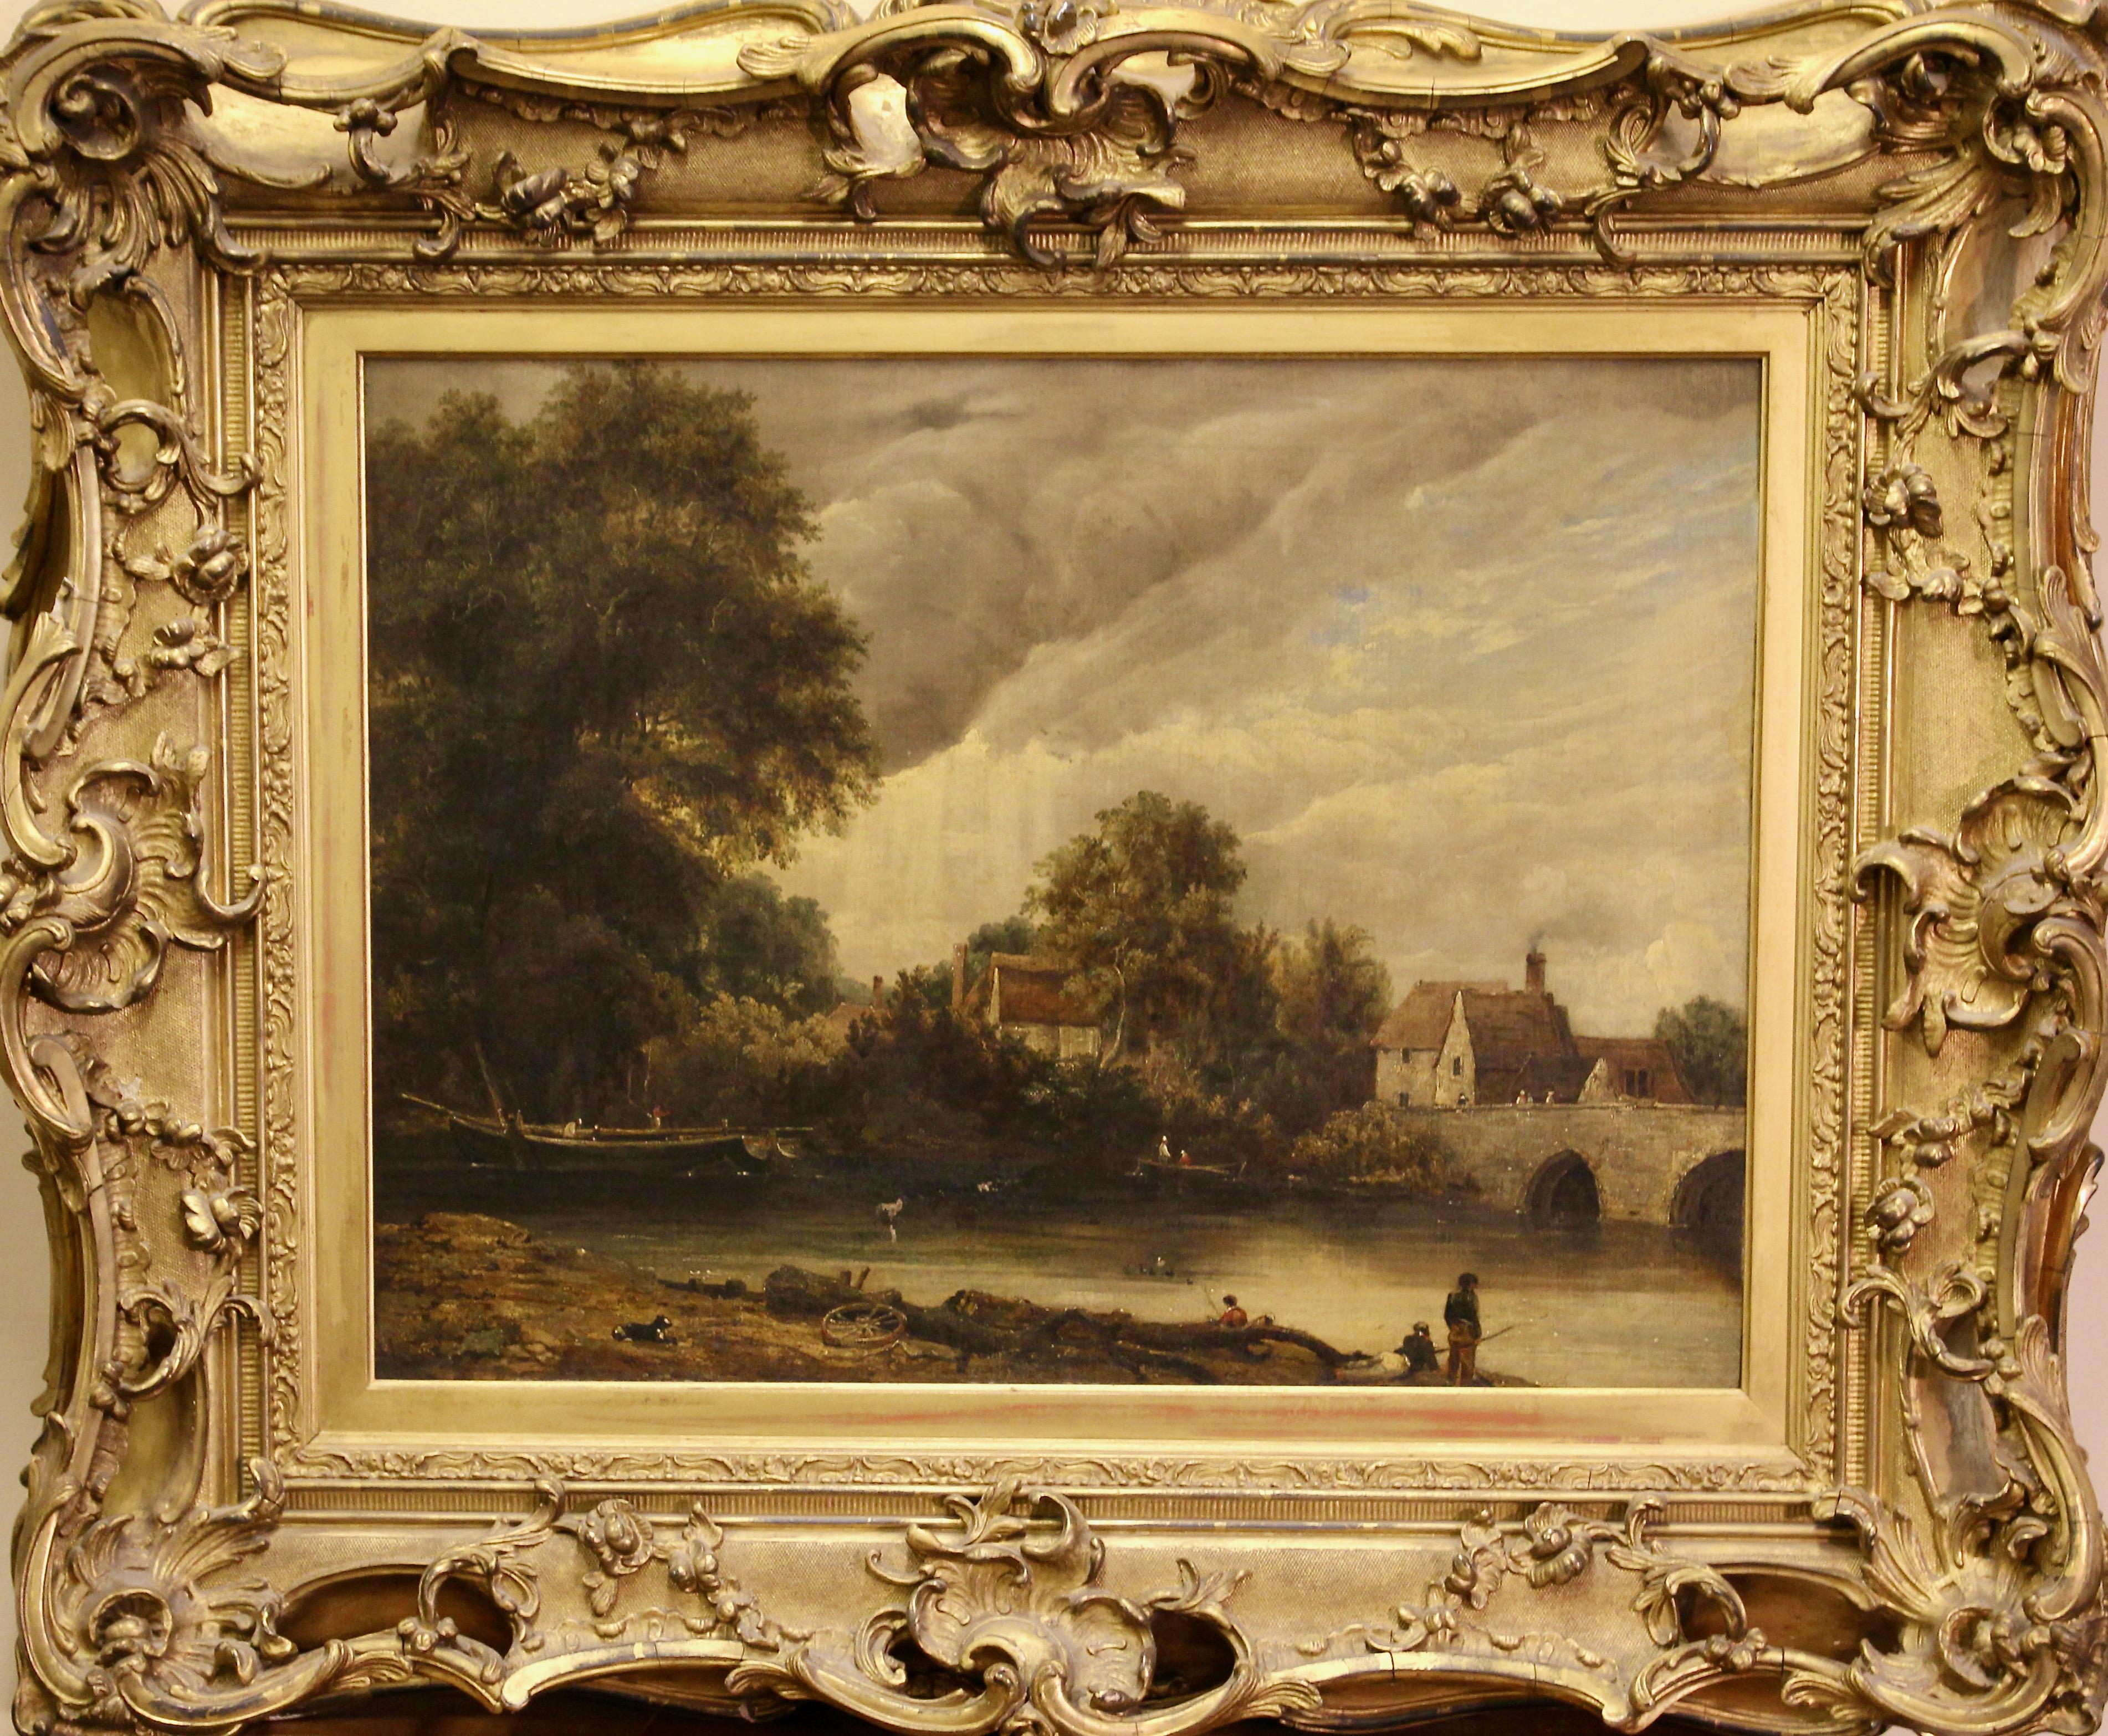 Unknown Landscape Painting - Oil Painting, 19. Century. Scottish, British Artist. Shore landscape.